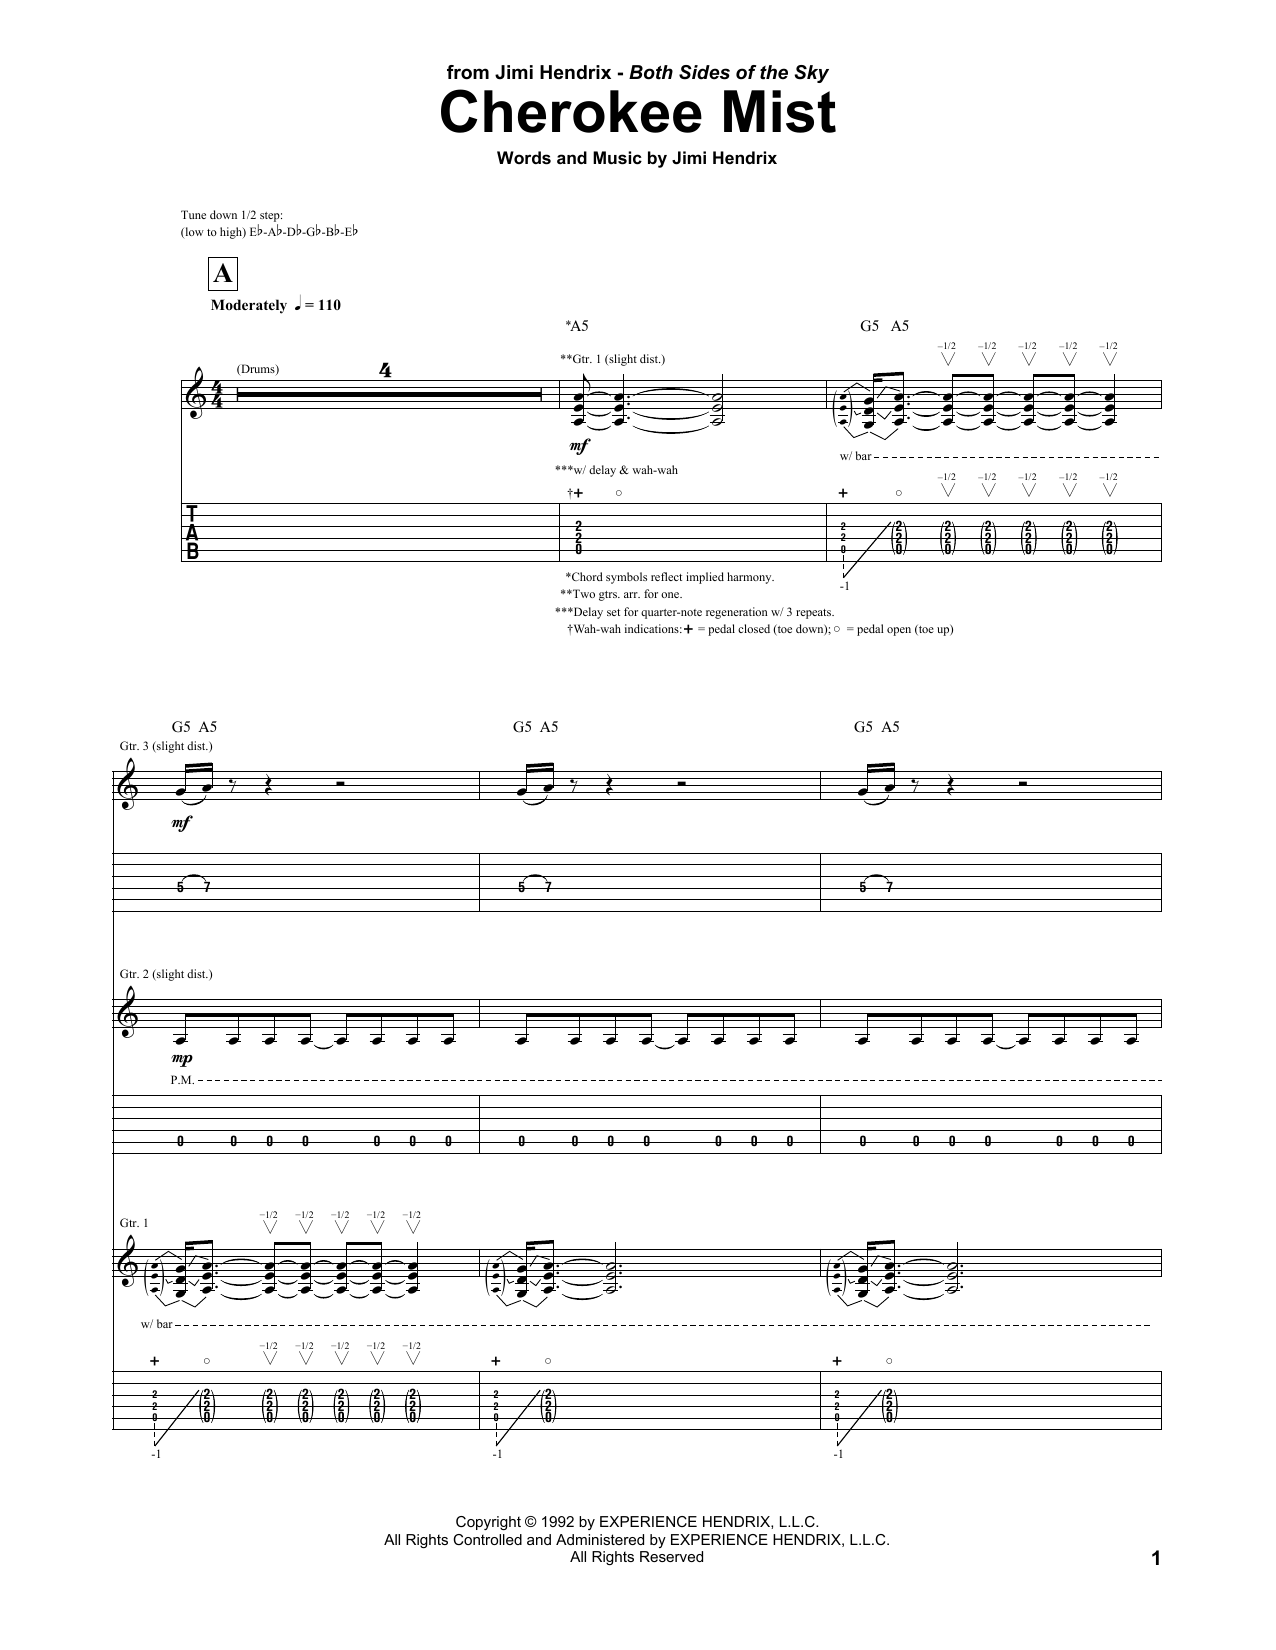 Jimi Hendrix Cherokee Mist Sheet Music Notes & Chords for Guitar Tab - Download or Print PDF